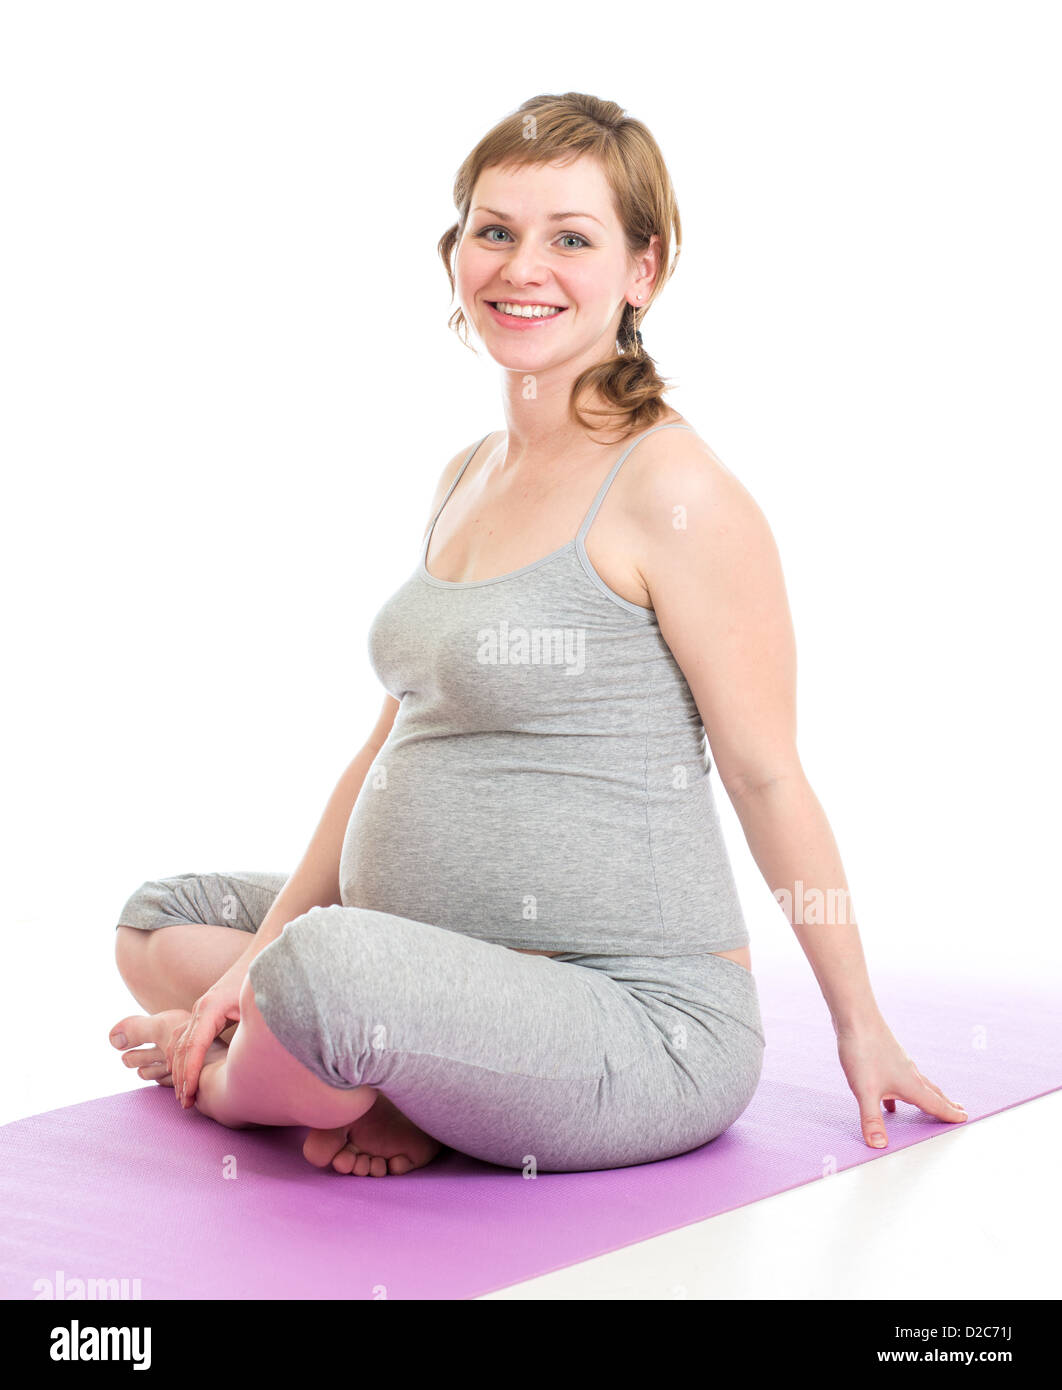 Pregnant woman doing gymnastic exercises isolated on white Stock Photo